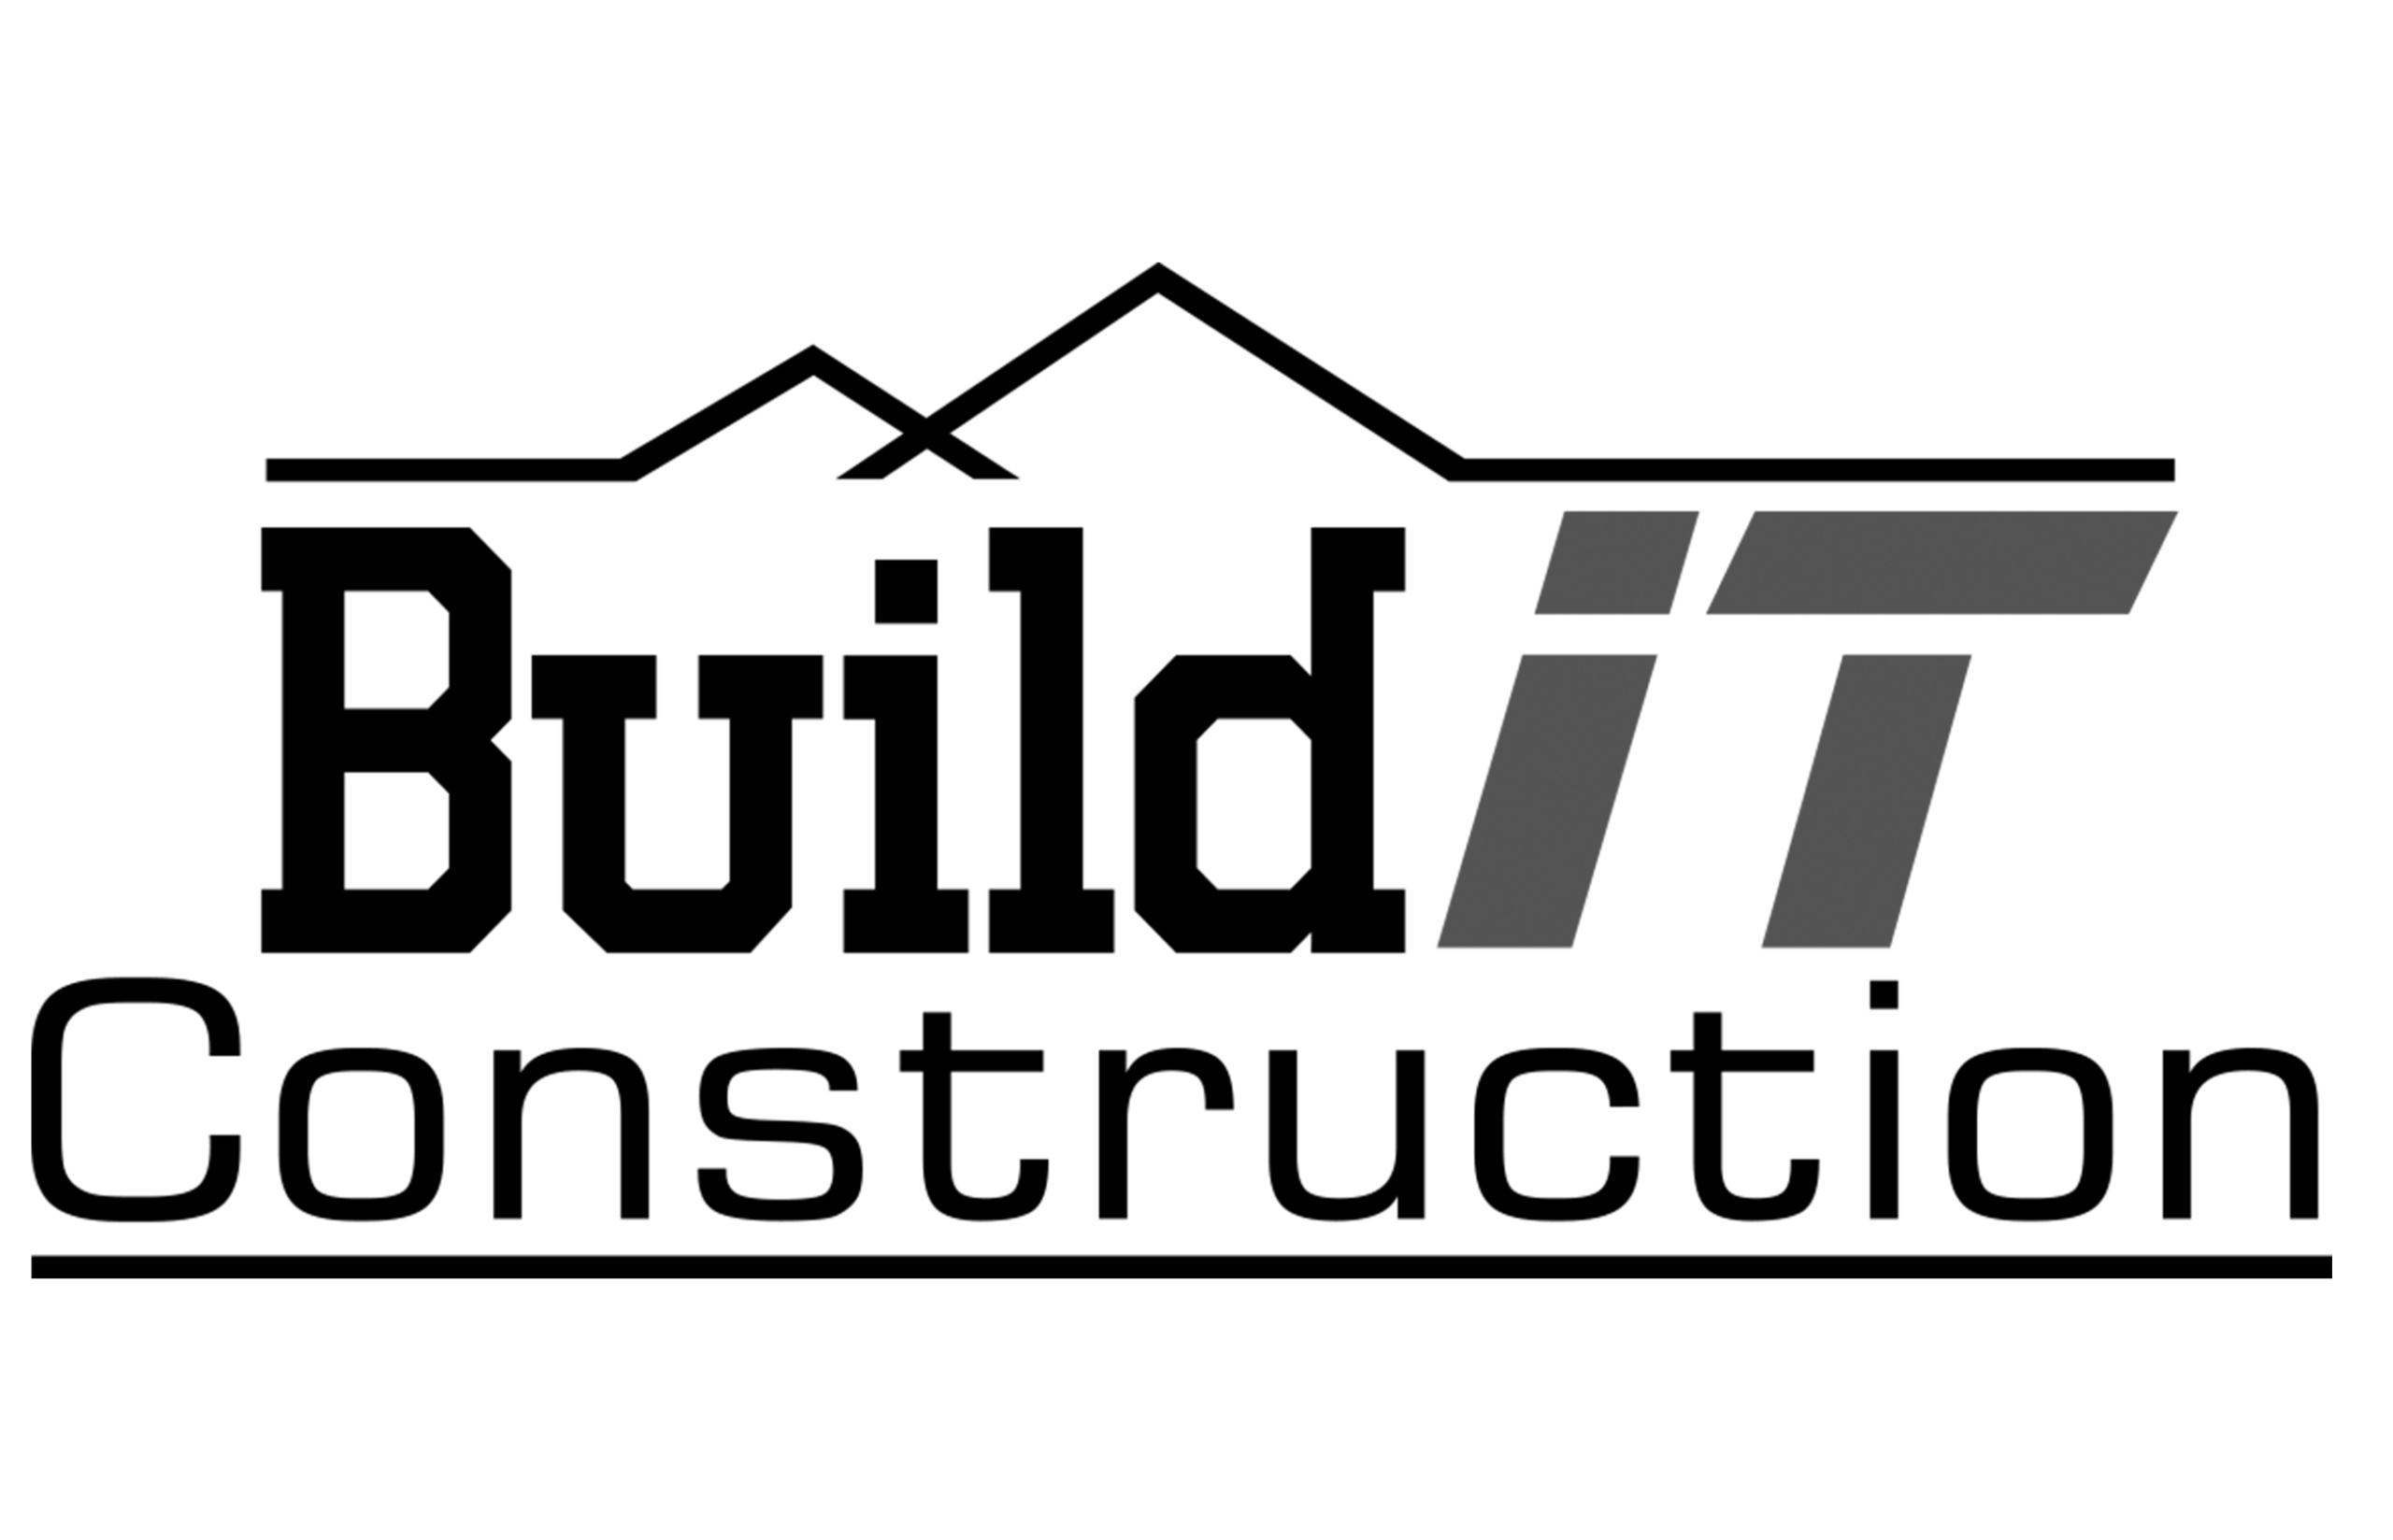 build it